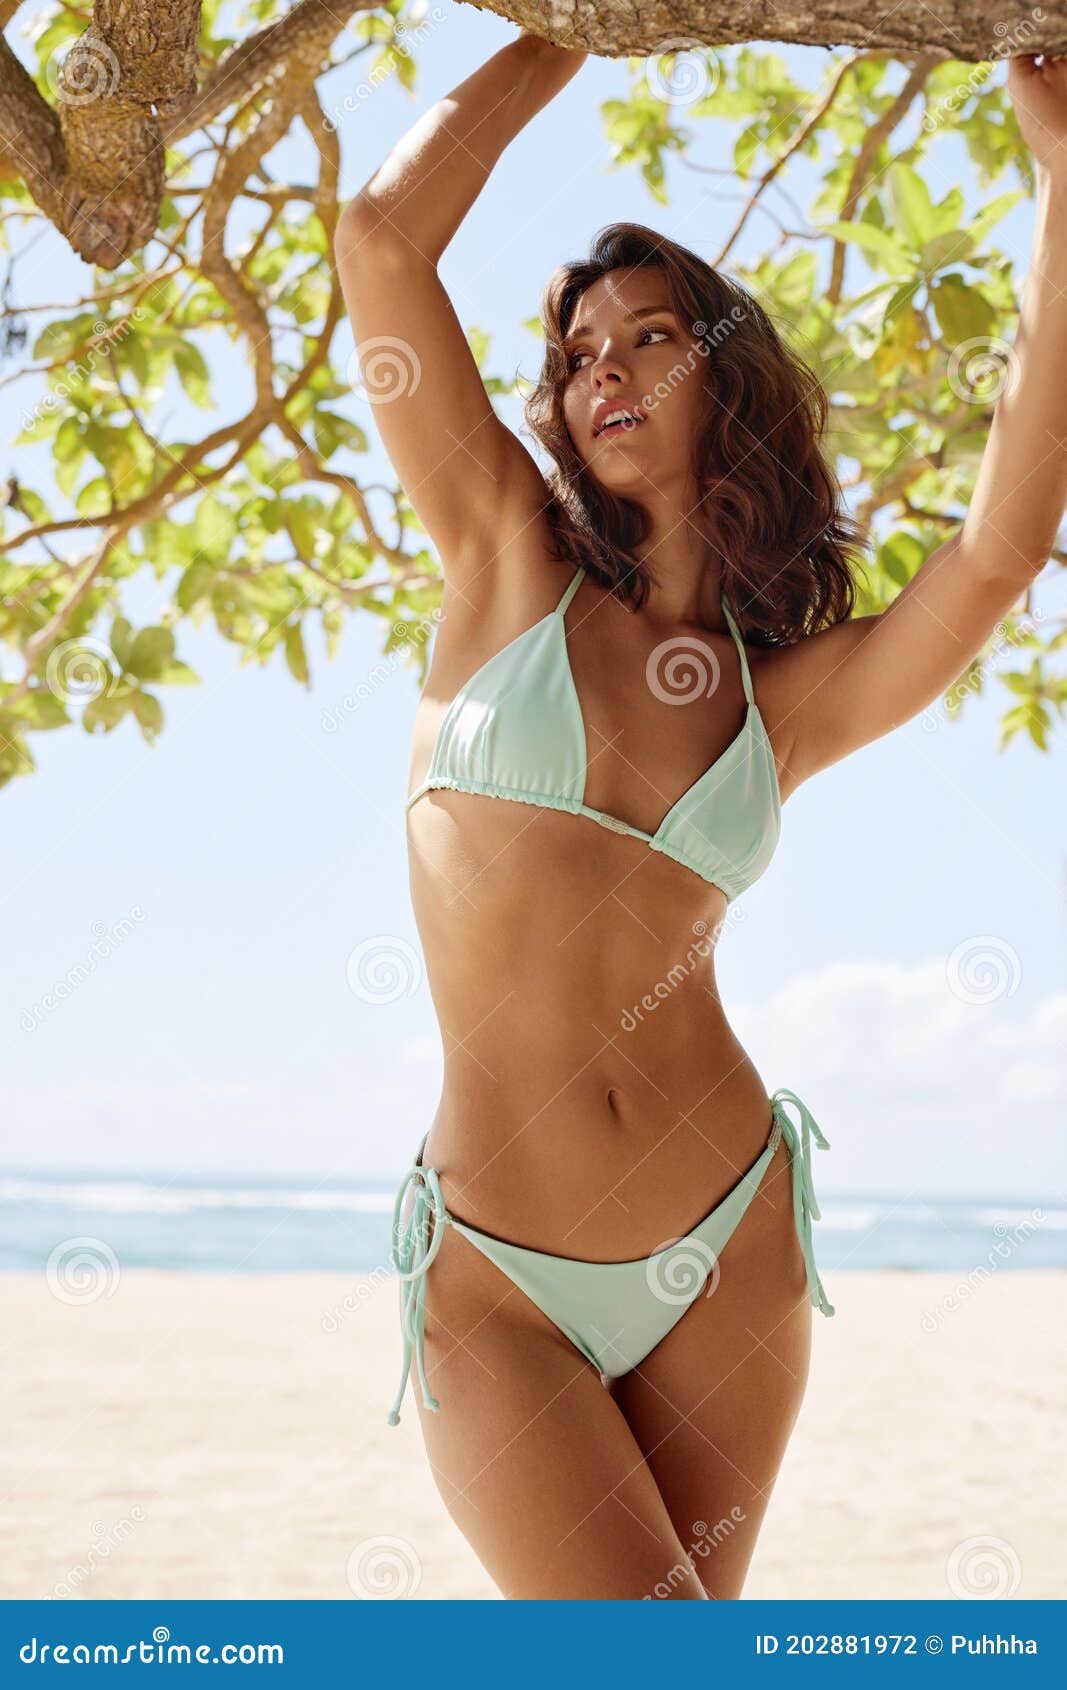 https://thumbs.dreamstime.com/z/beautiful-girl-s-stylish-bikini-portrait-posing-sandy-beach-bali-indonesia-front-view-sexy-model-perfect-body-202881972.jpg